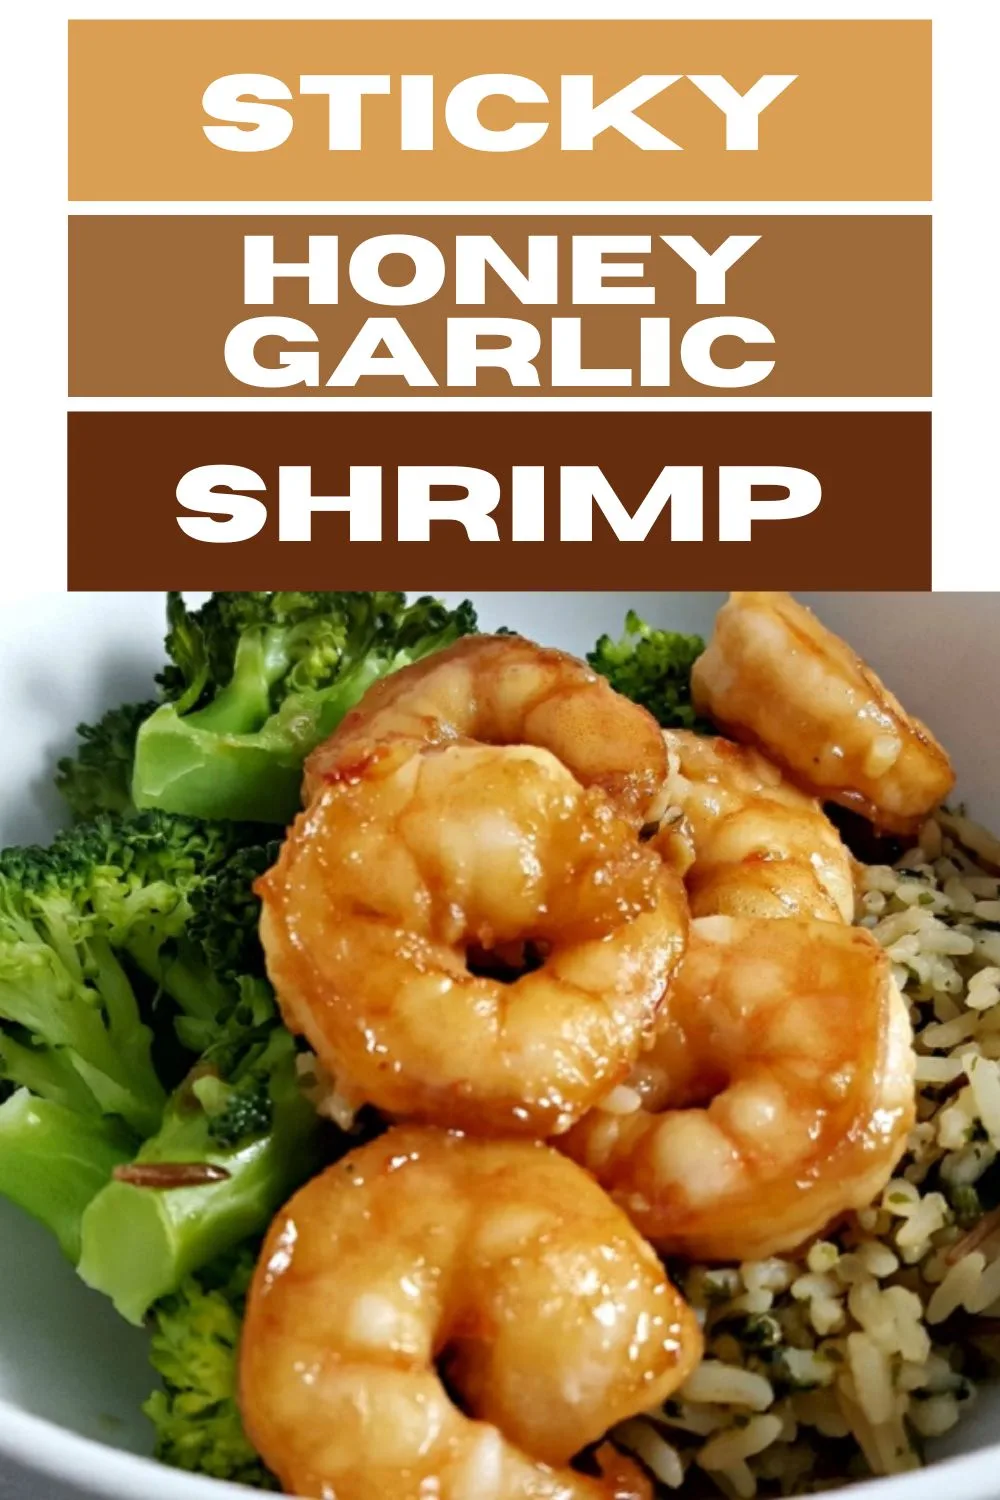 Sticky Honey Garlic Shrimp over rice and broccoli.